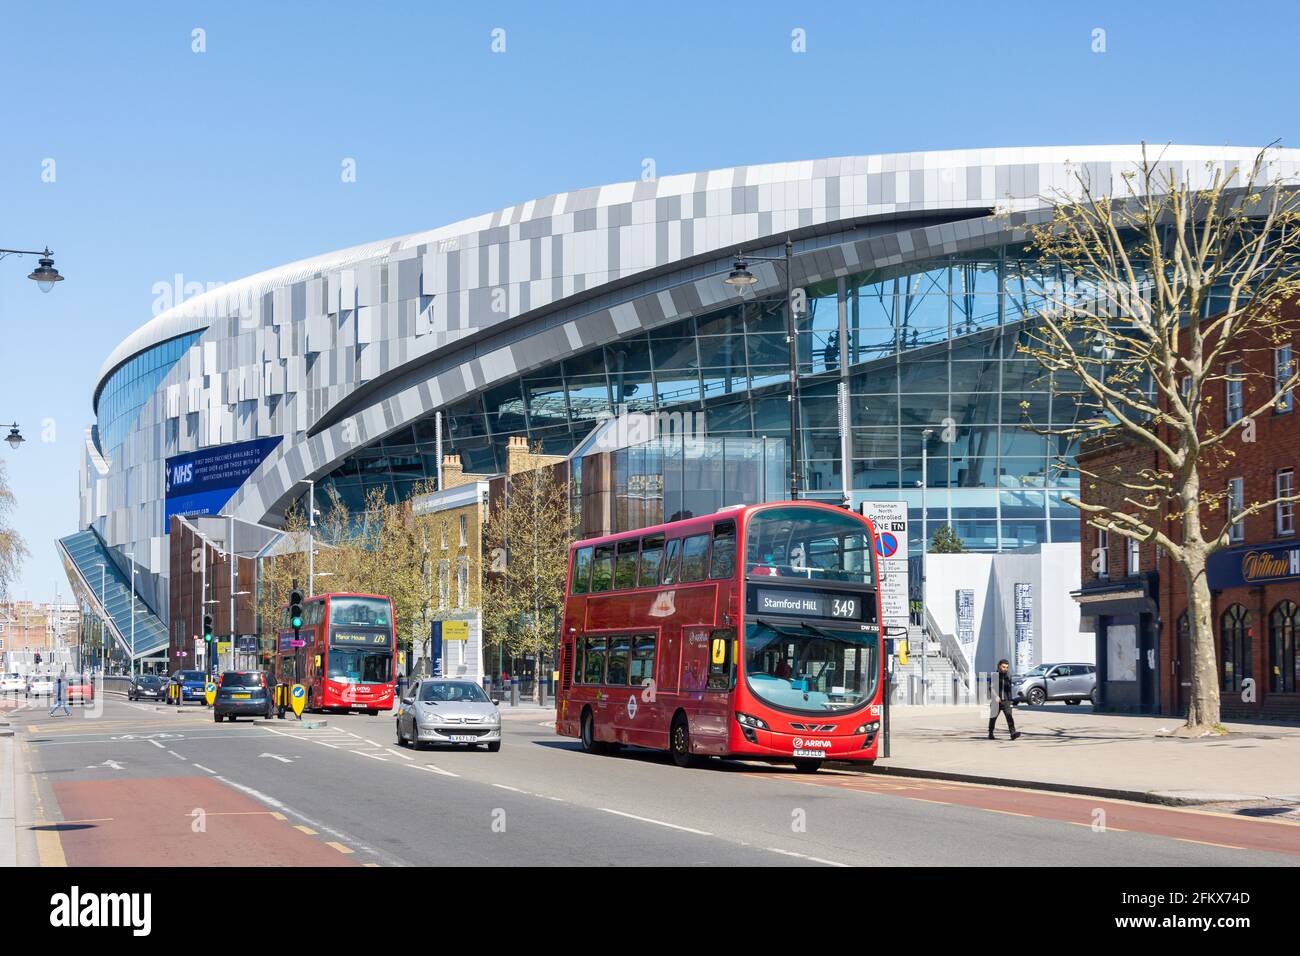 New White Hart Lane Stadium, High Street, Tottenham, London Borough of Haringey, Greater London, Angleterre, Royaume-Uni Banque D'Images